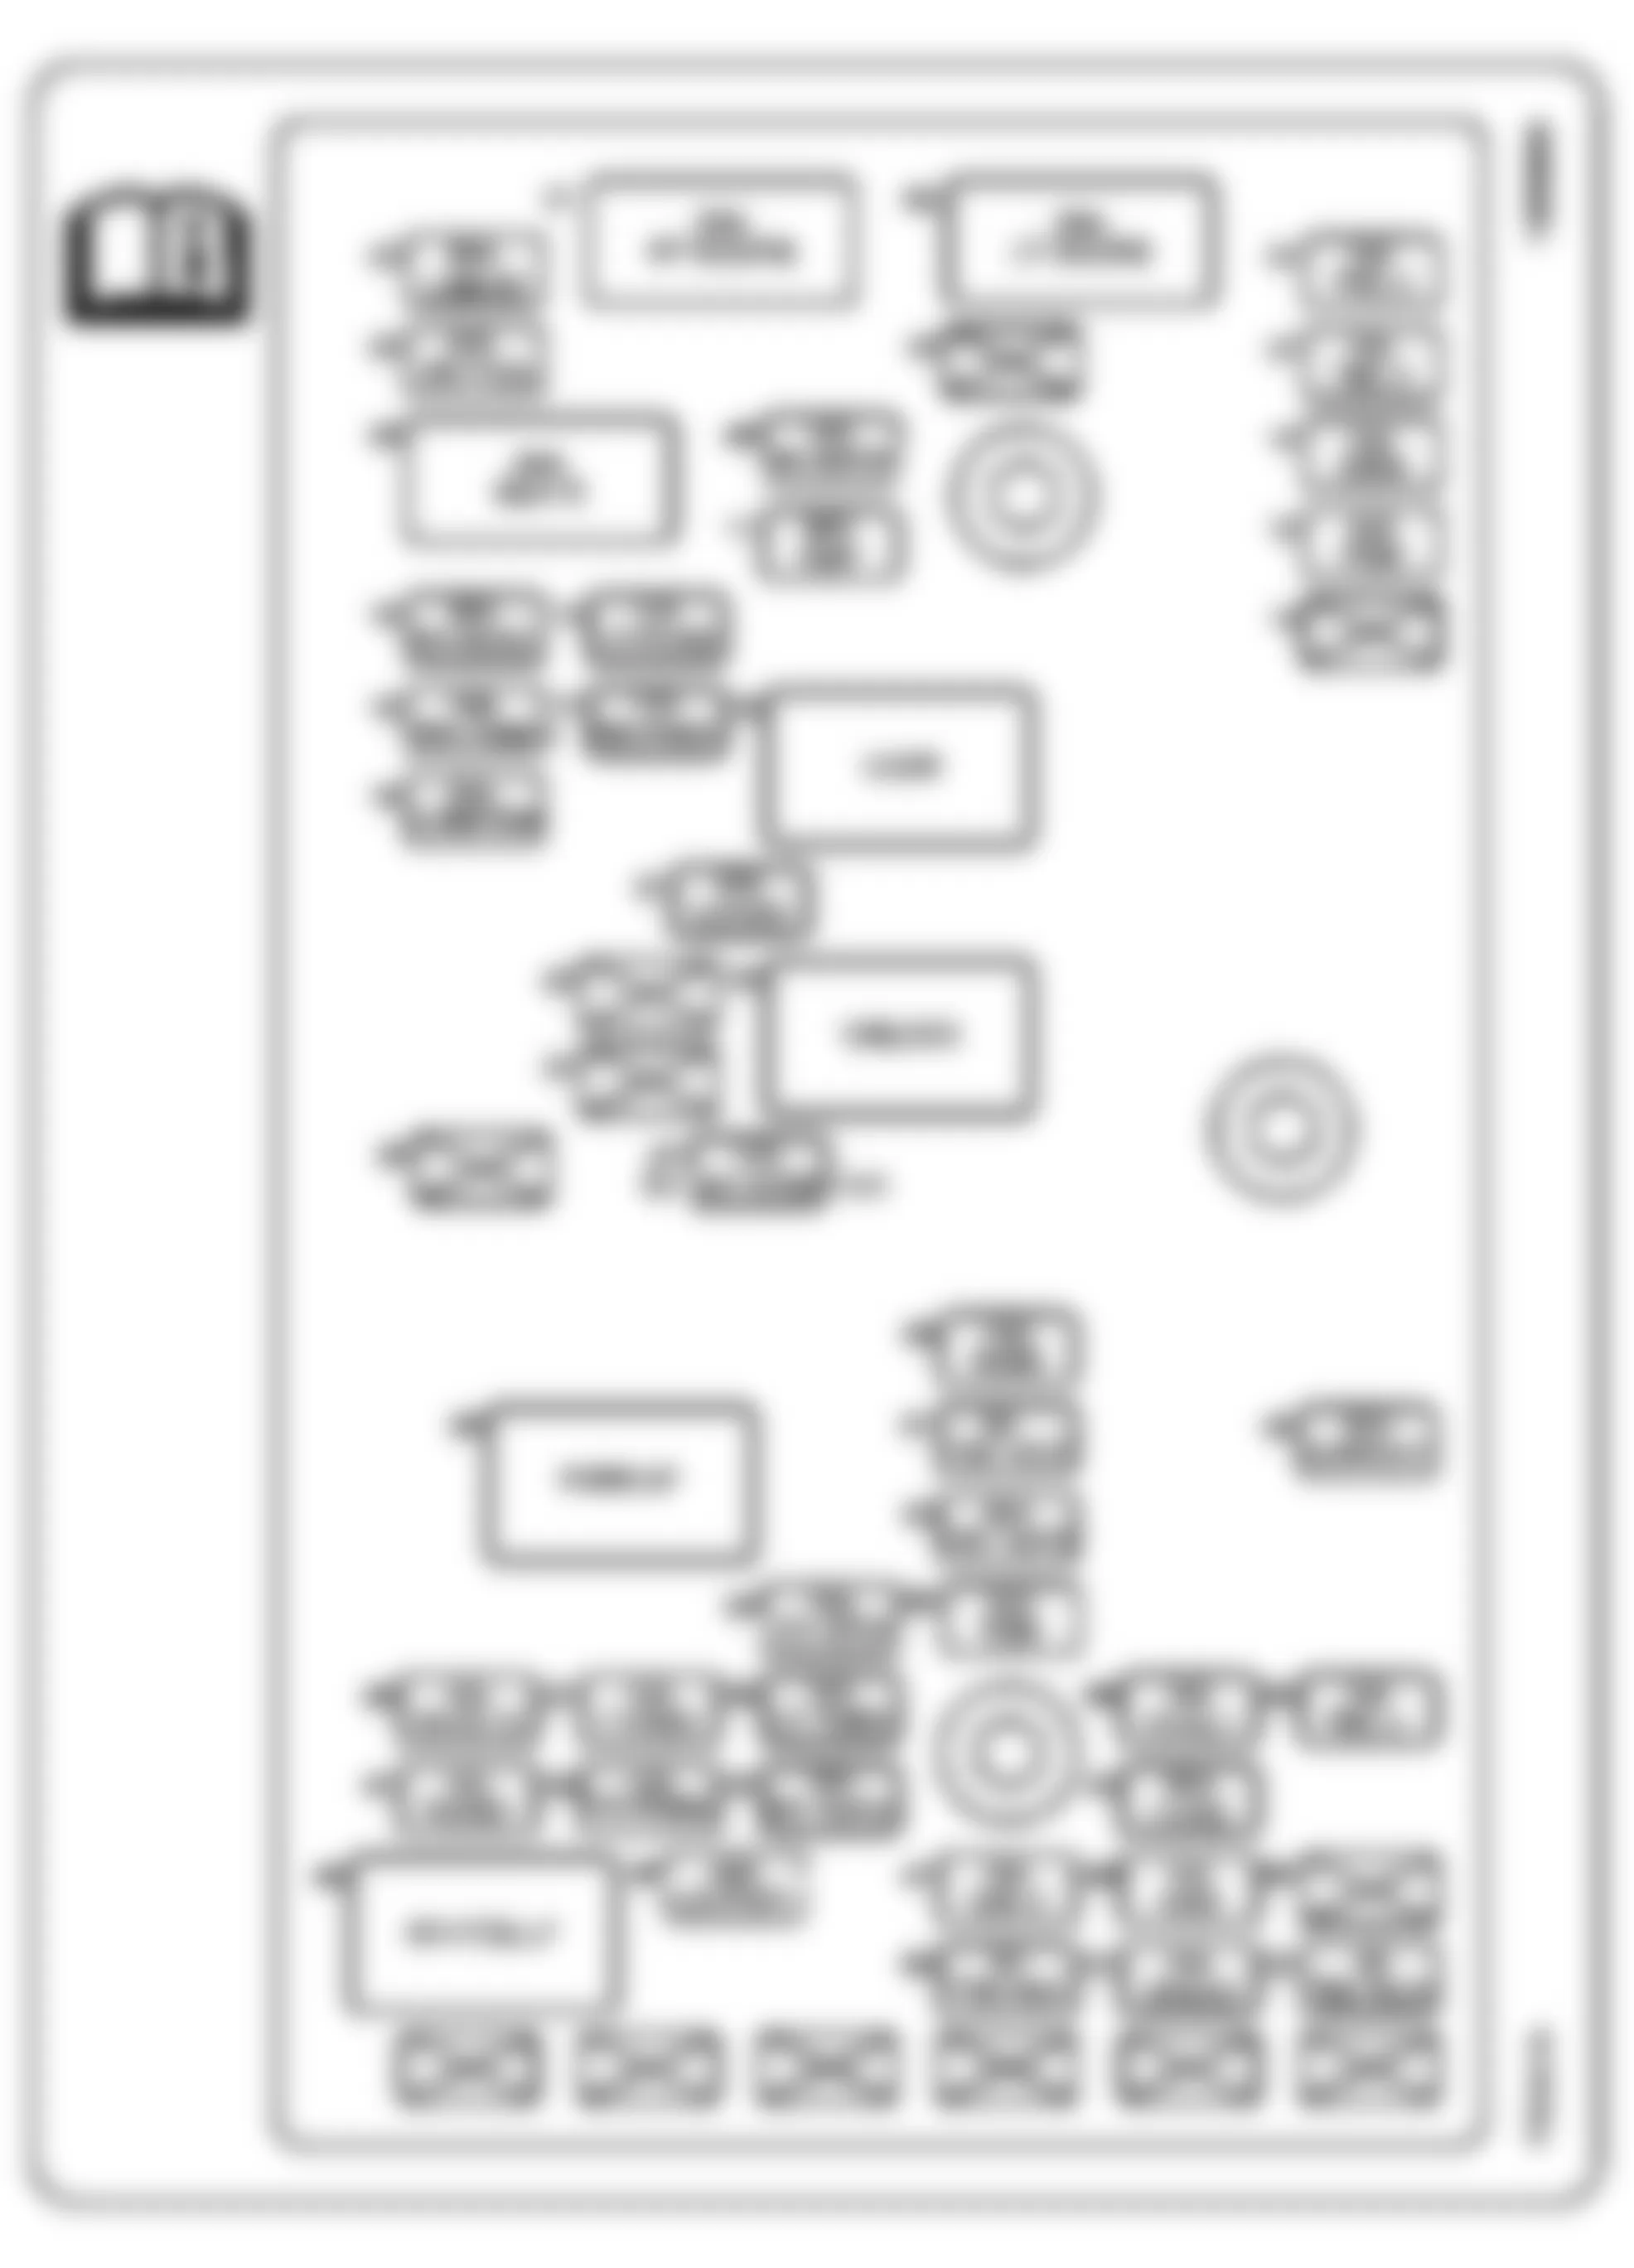 GMC Envoy XL 2006 - Component Locations -  Identifying Rear Fuse Block Components (Short Wheelbase)